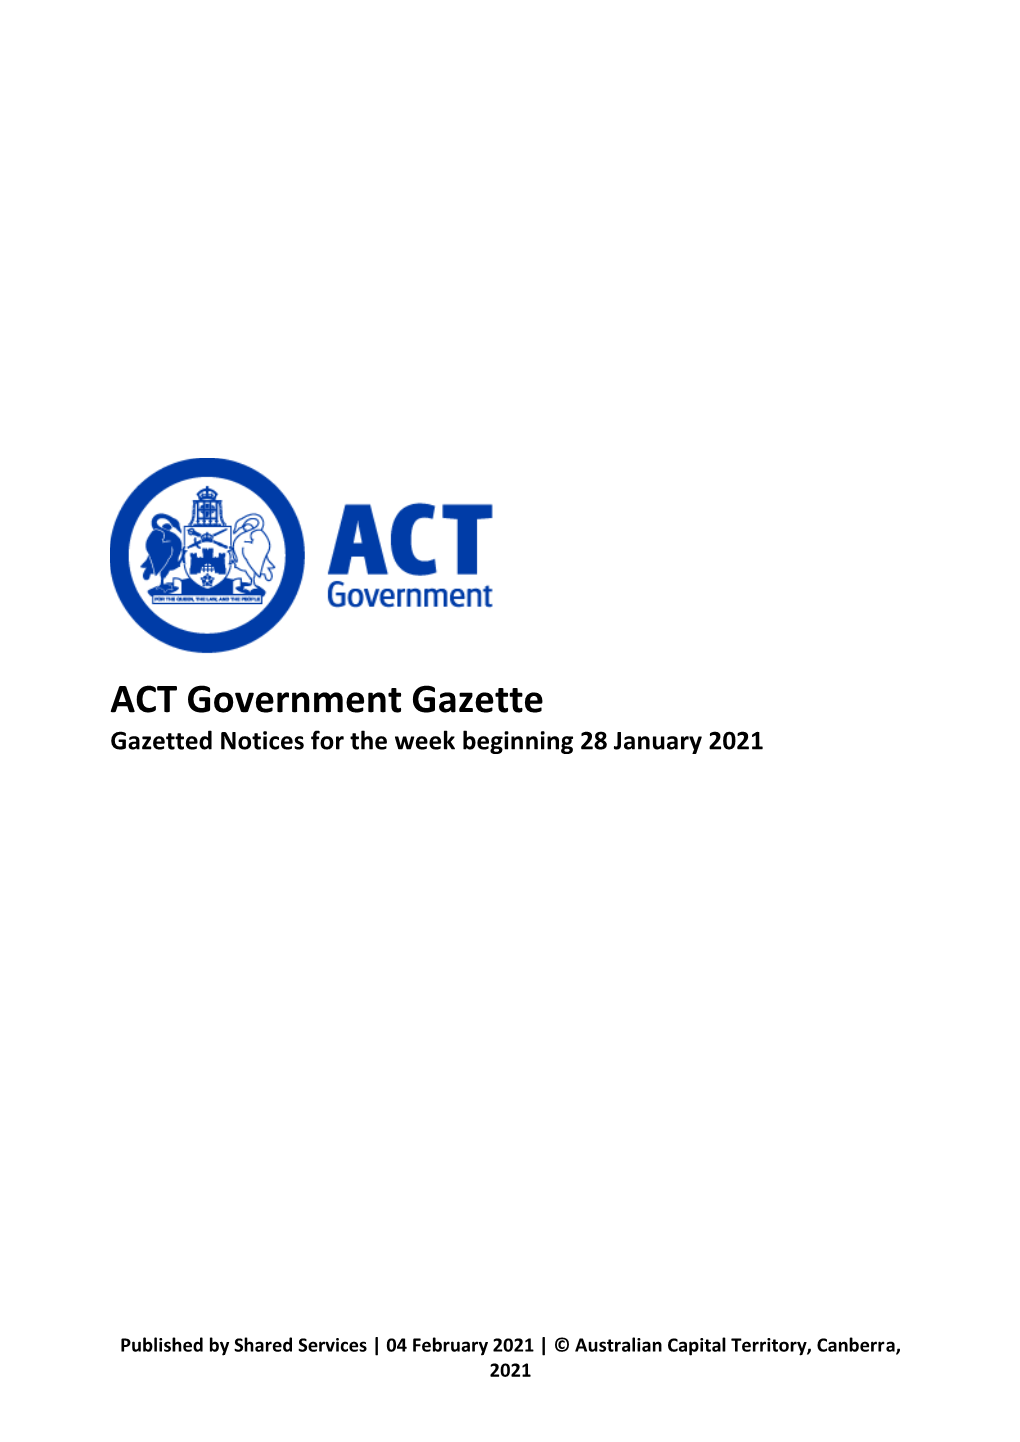 ACT Government Gazette 4 Feb 2021